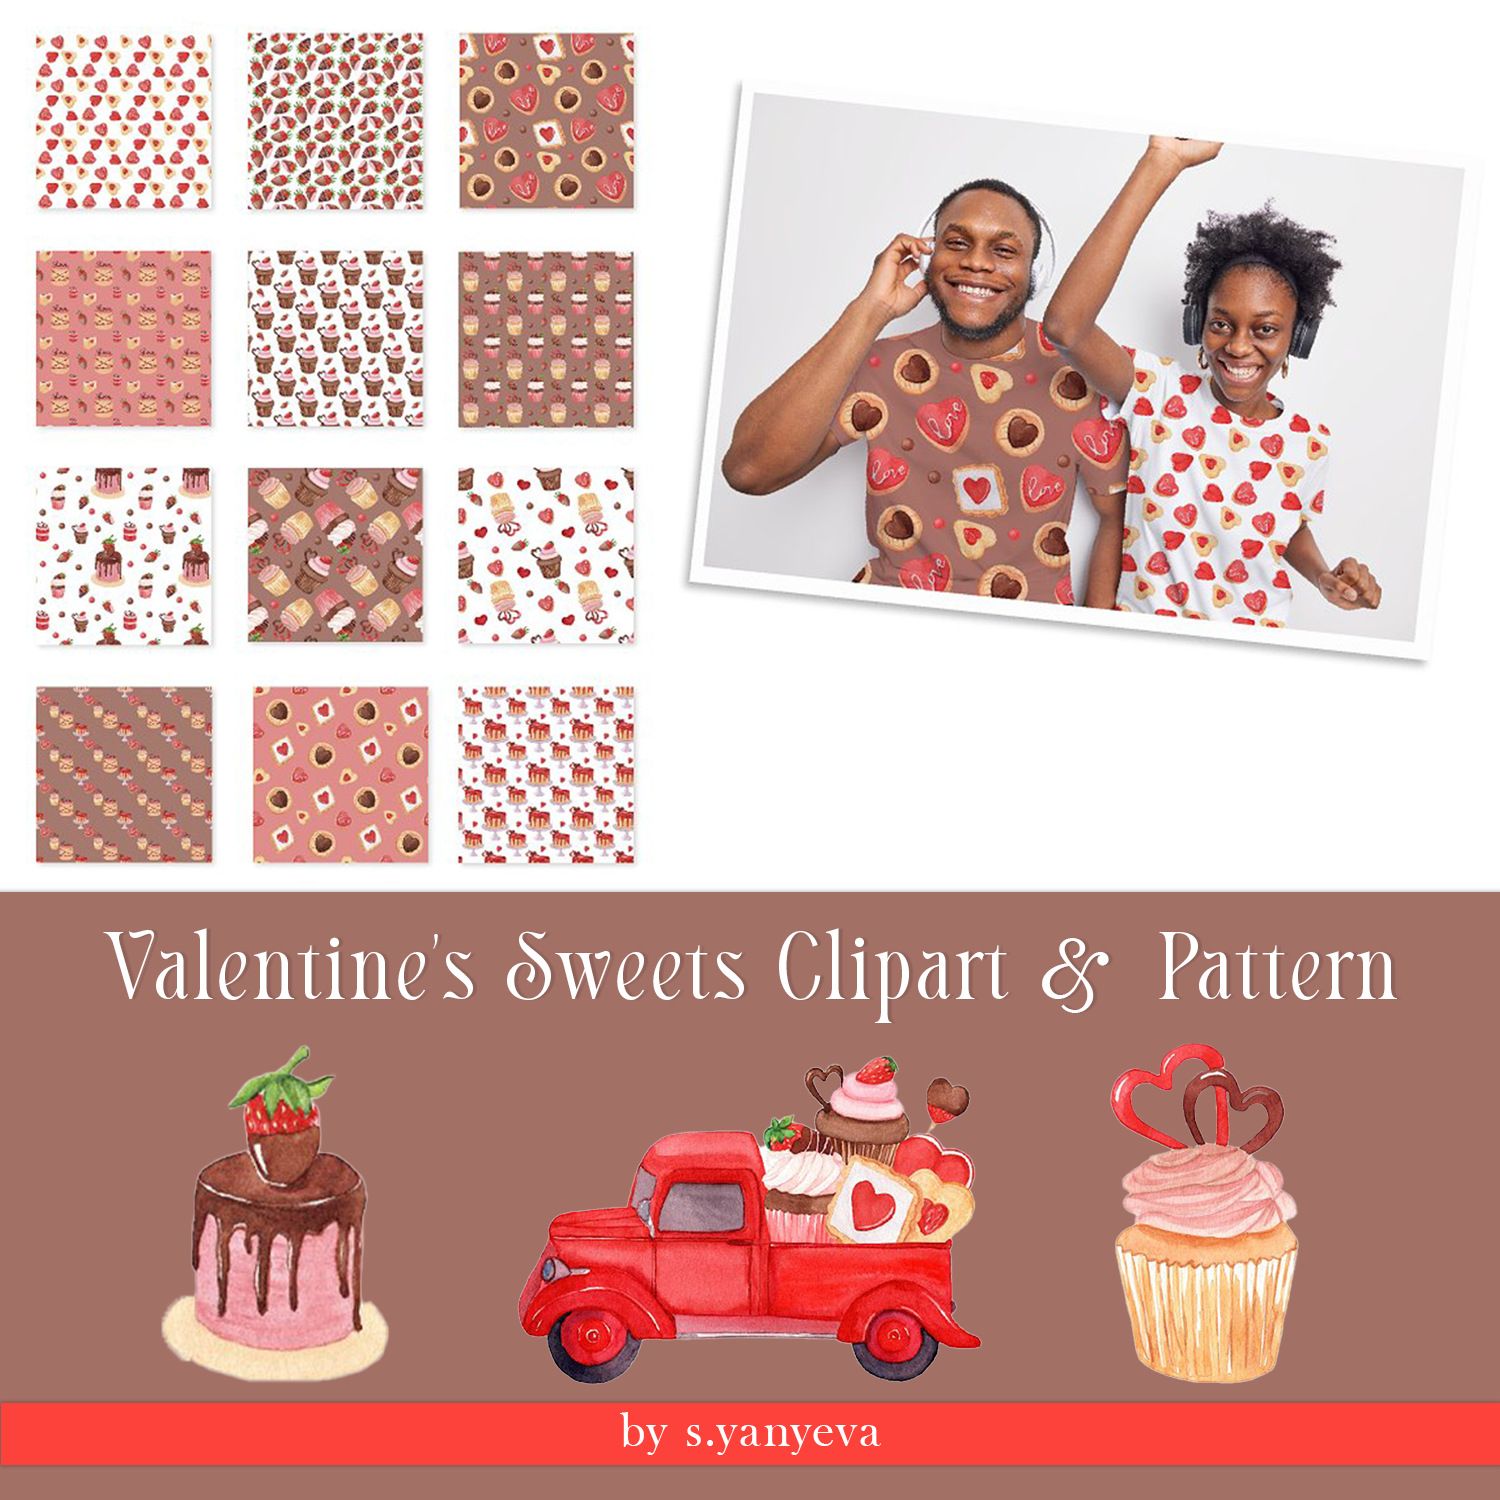 Prints ofvalentines sweets clipart pattern 1500x1500